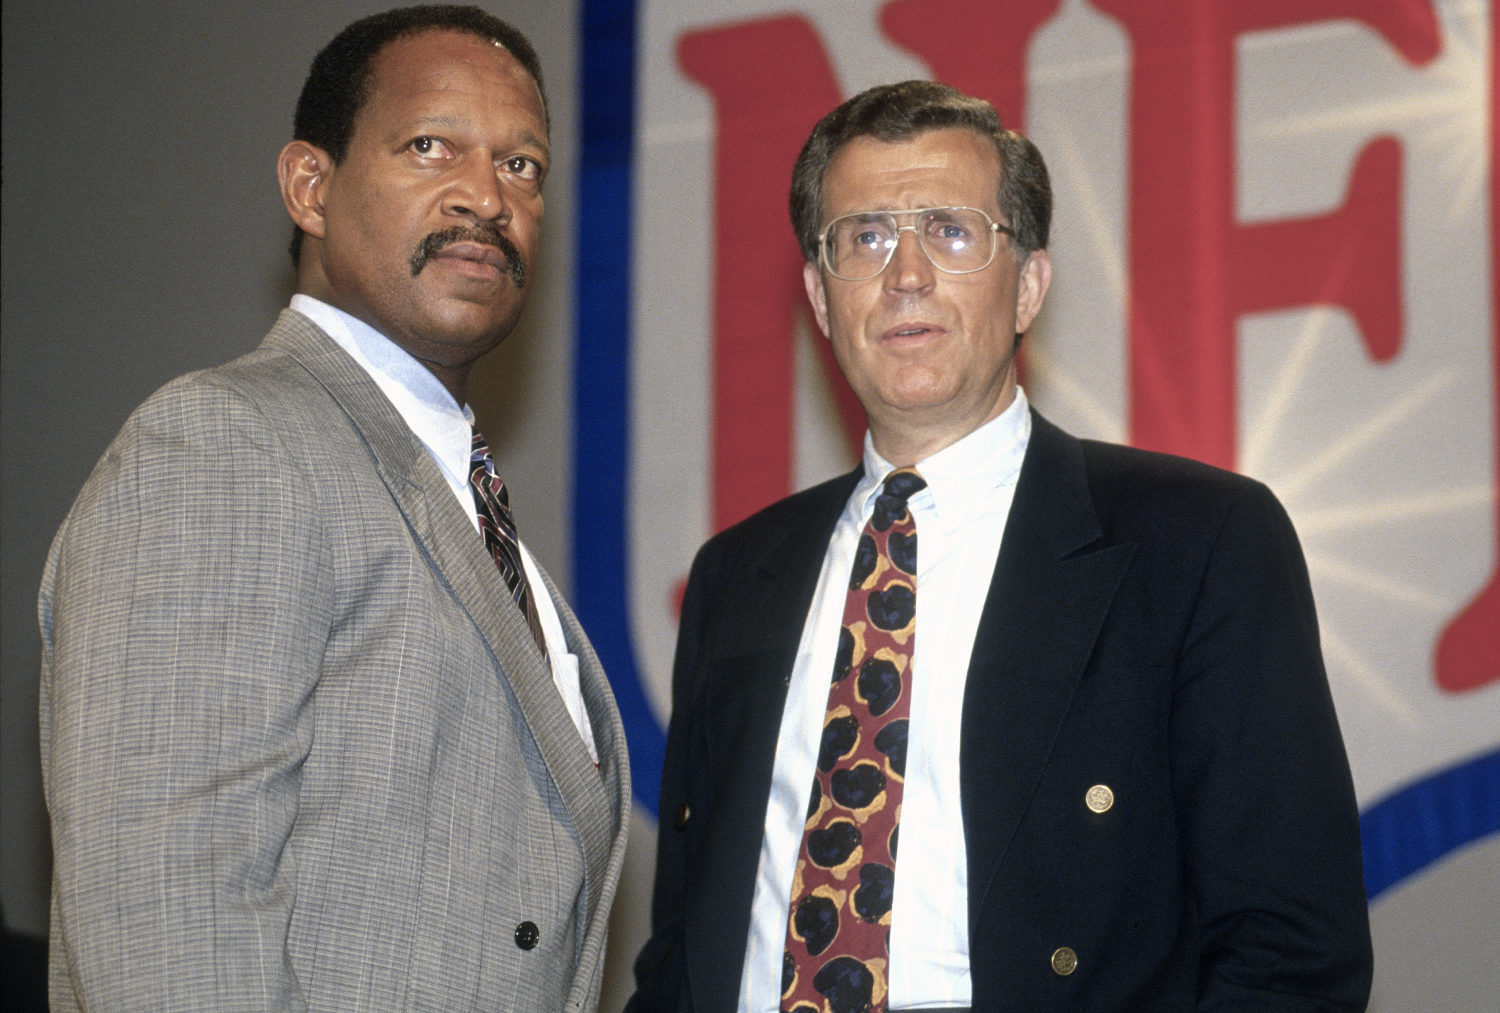 Gene Upshaw poses next to NFL Commissioner Paul Tagliabue